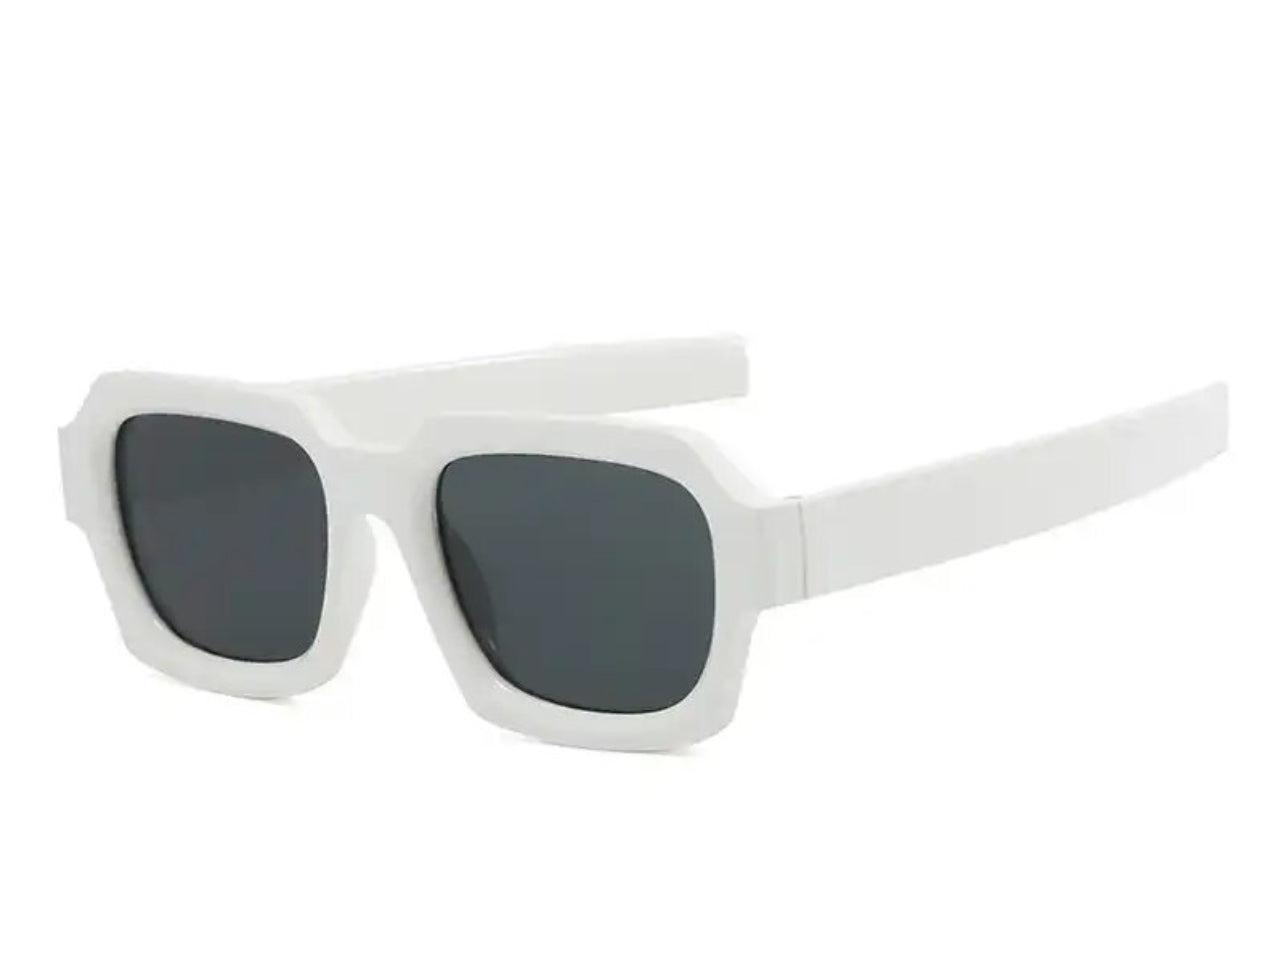 "Dont wait up" Fashion Plastic Frame Sunglasses